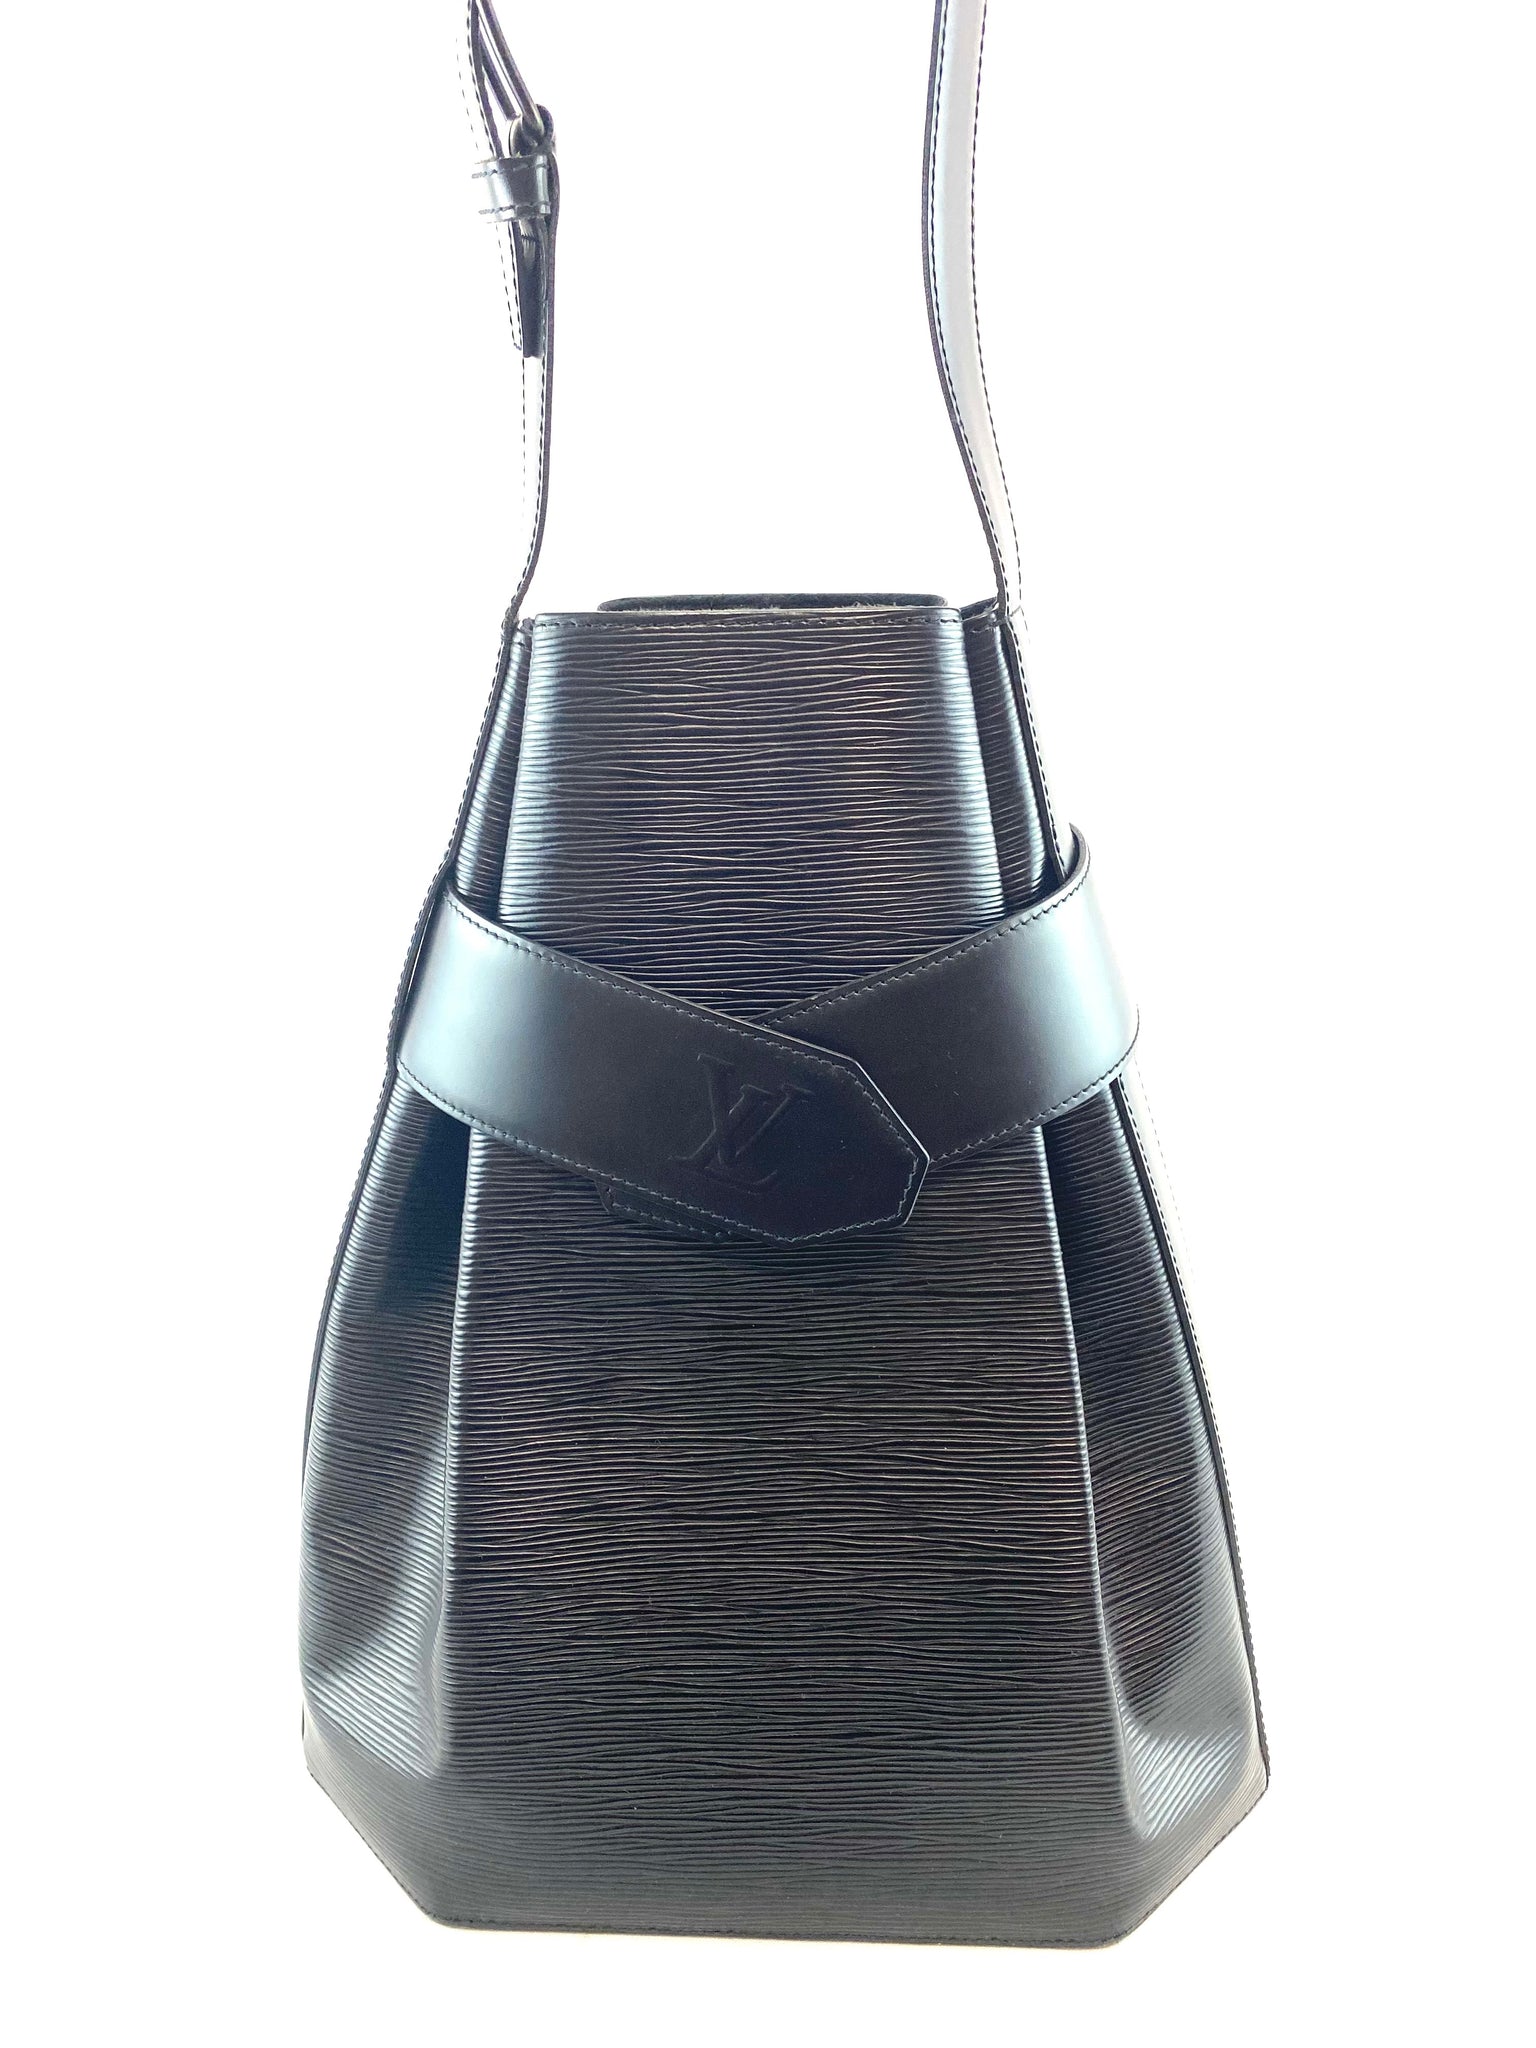 Black Louis Vuitton Epi Sac Montaigne Handbag